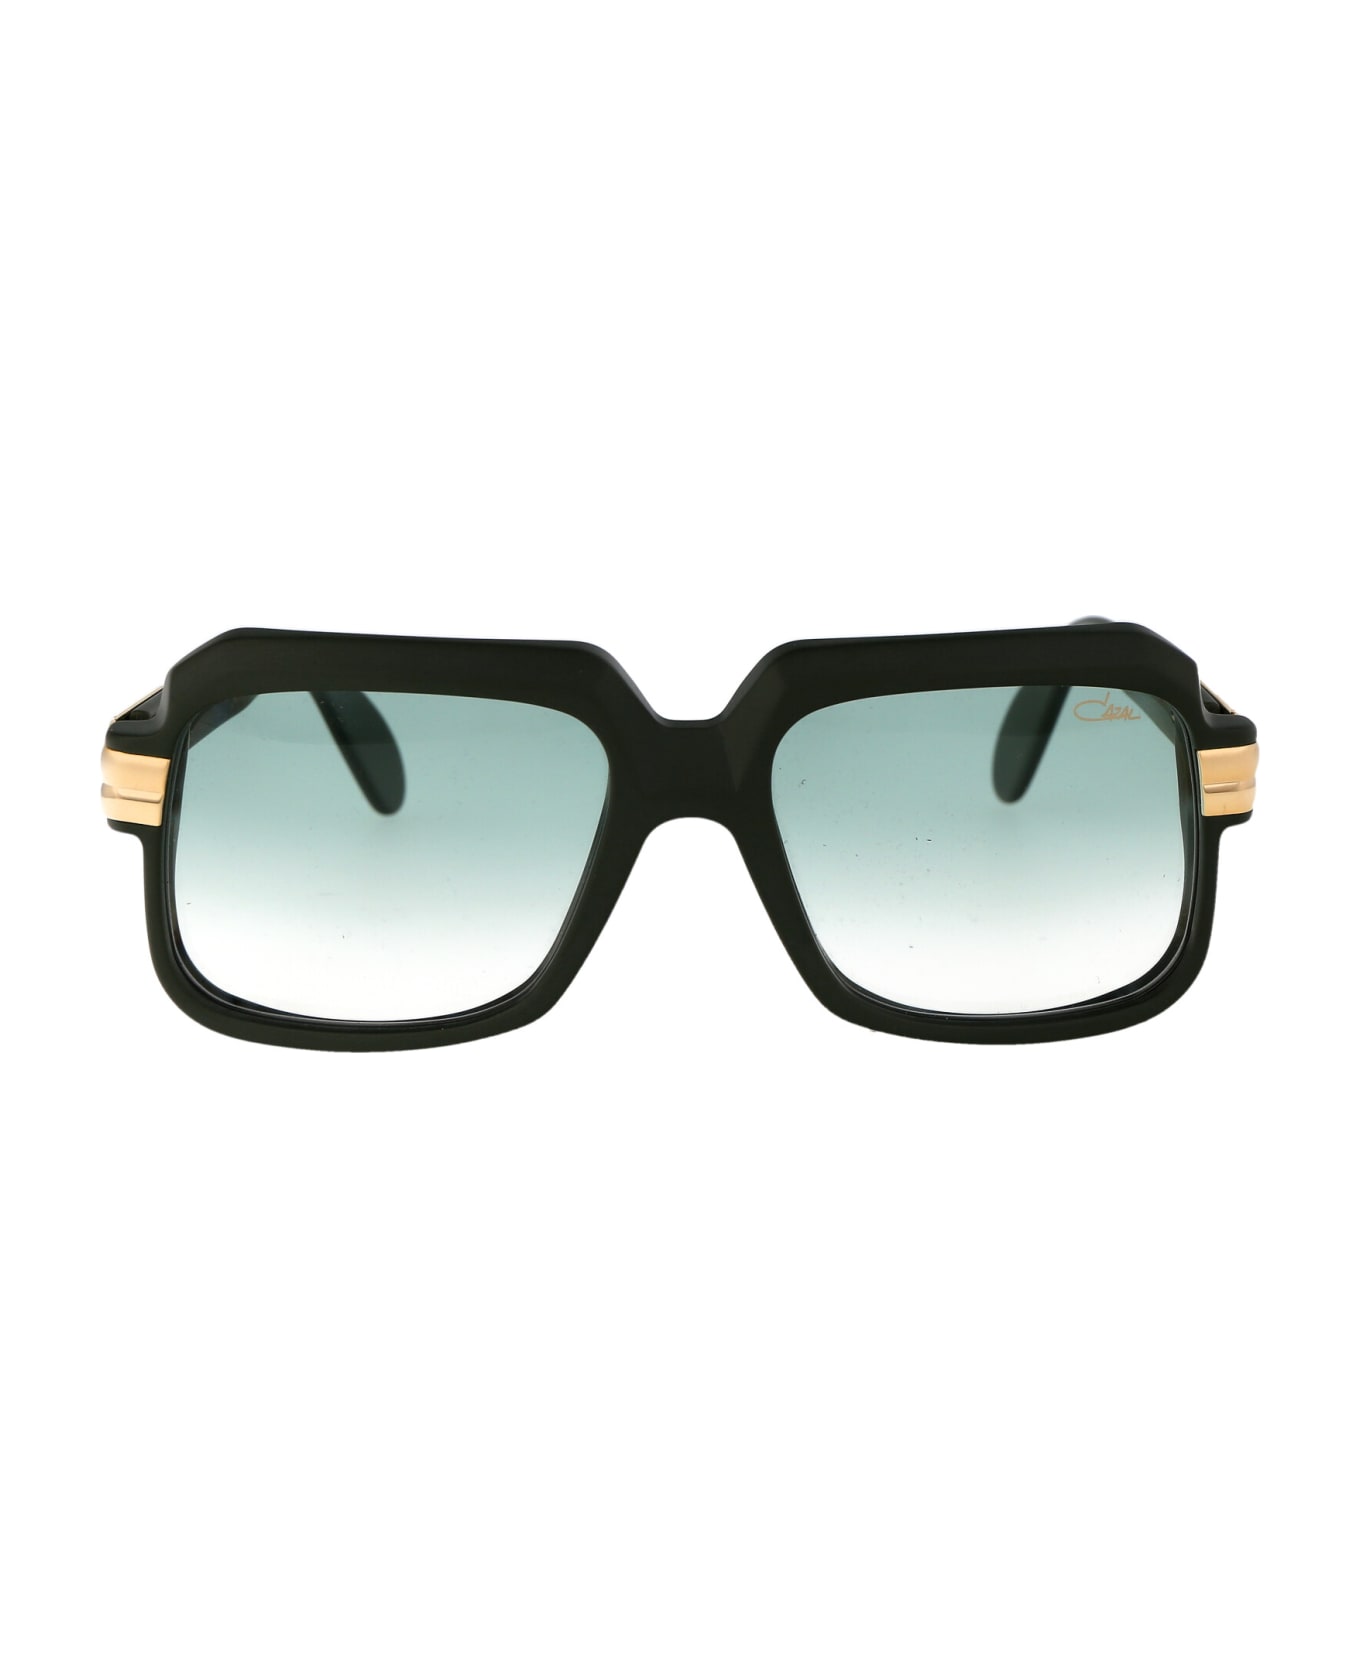 Cazal Mod. 607/3 Sunglasses - 050 GREEN サングラス